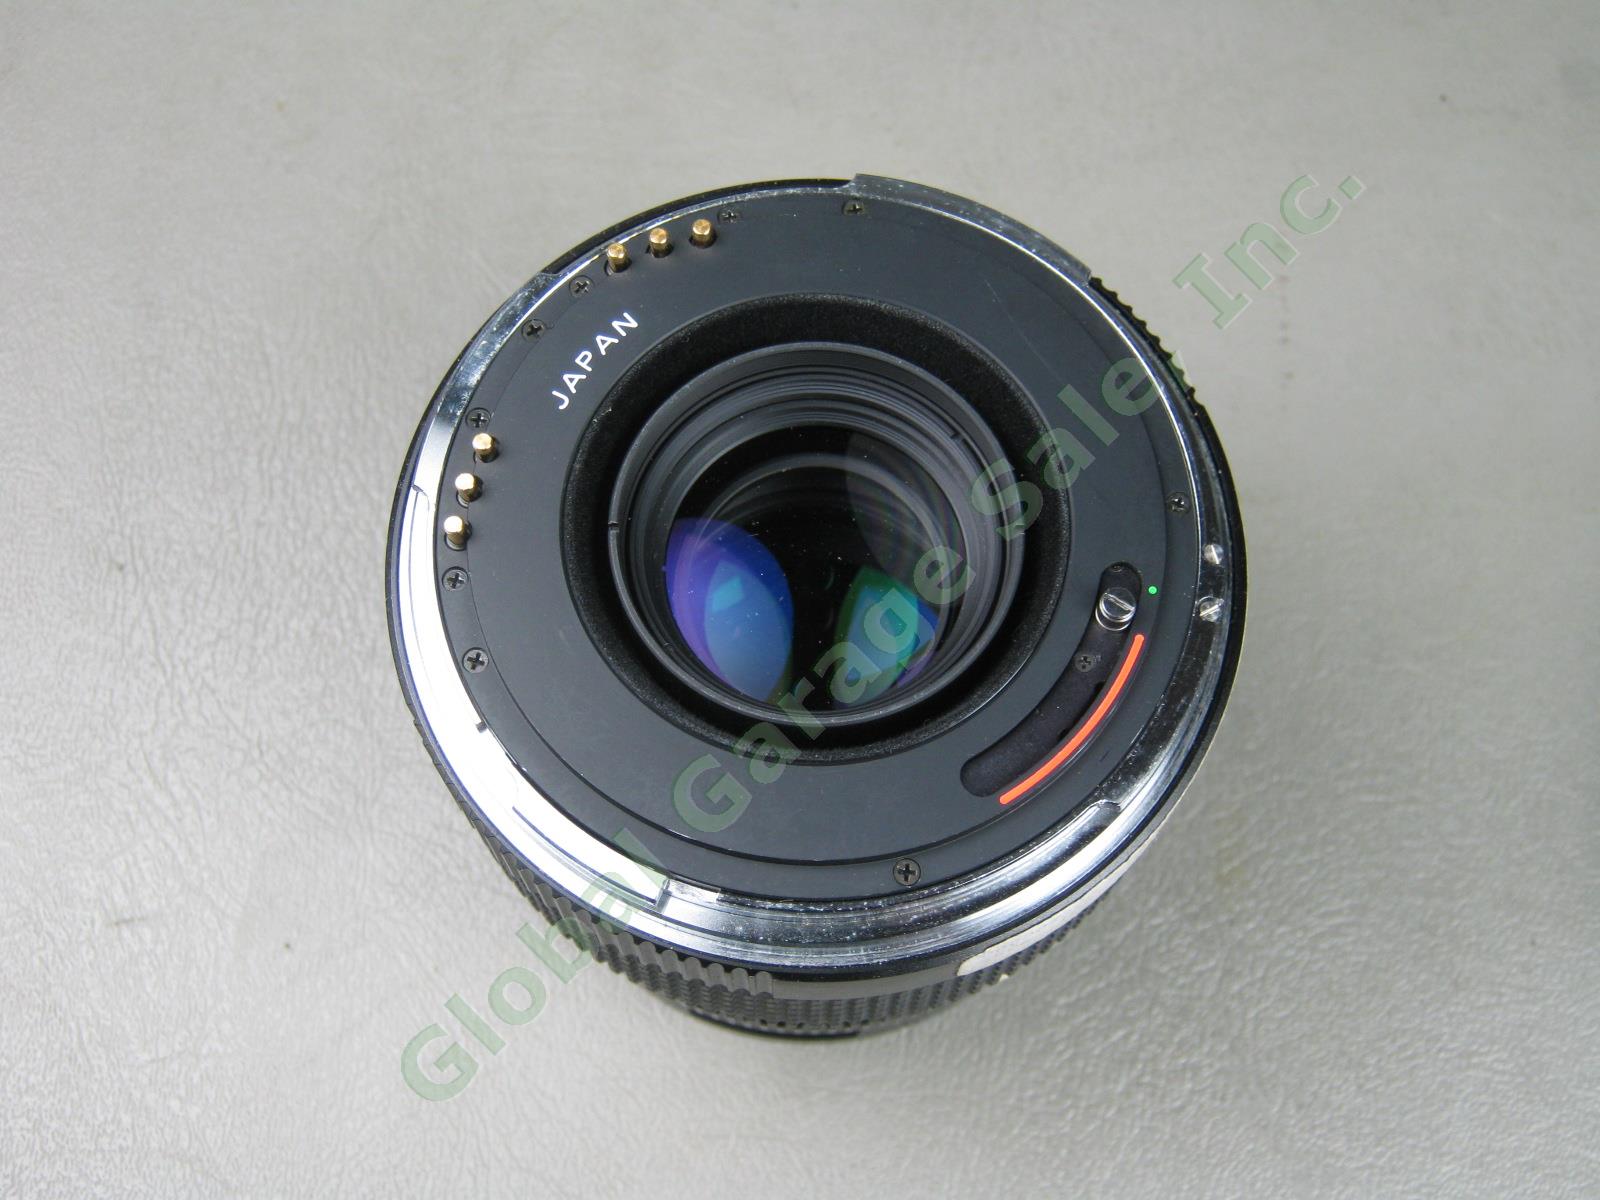 Bronica GS-1 6x7 Medium Format Camera Zenzanon-PG 100mm Lens Backs Grip Bundle 10